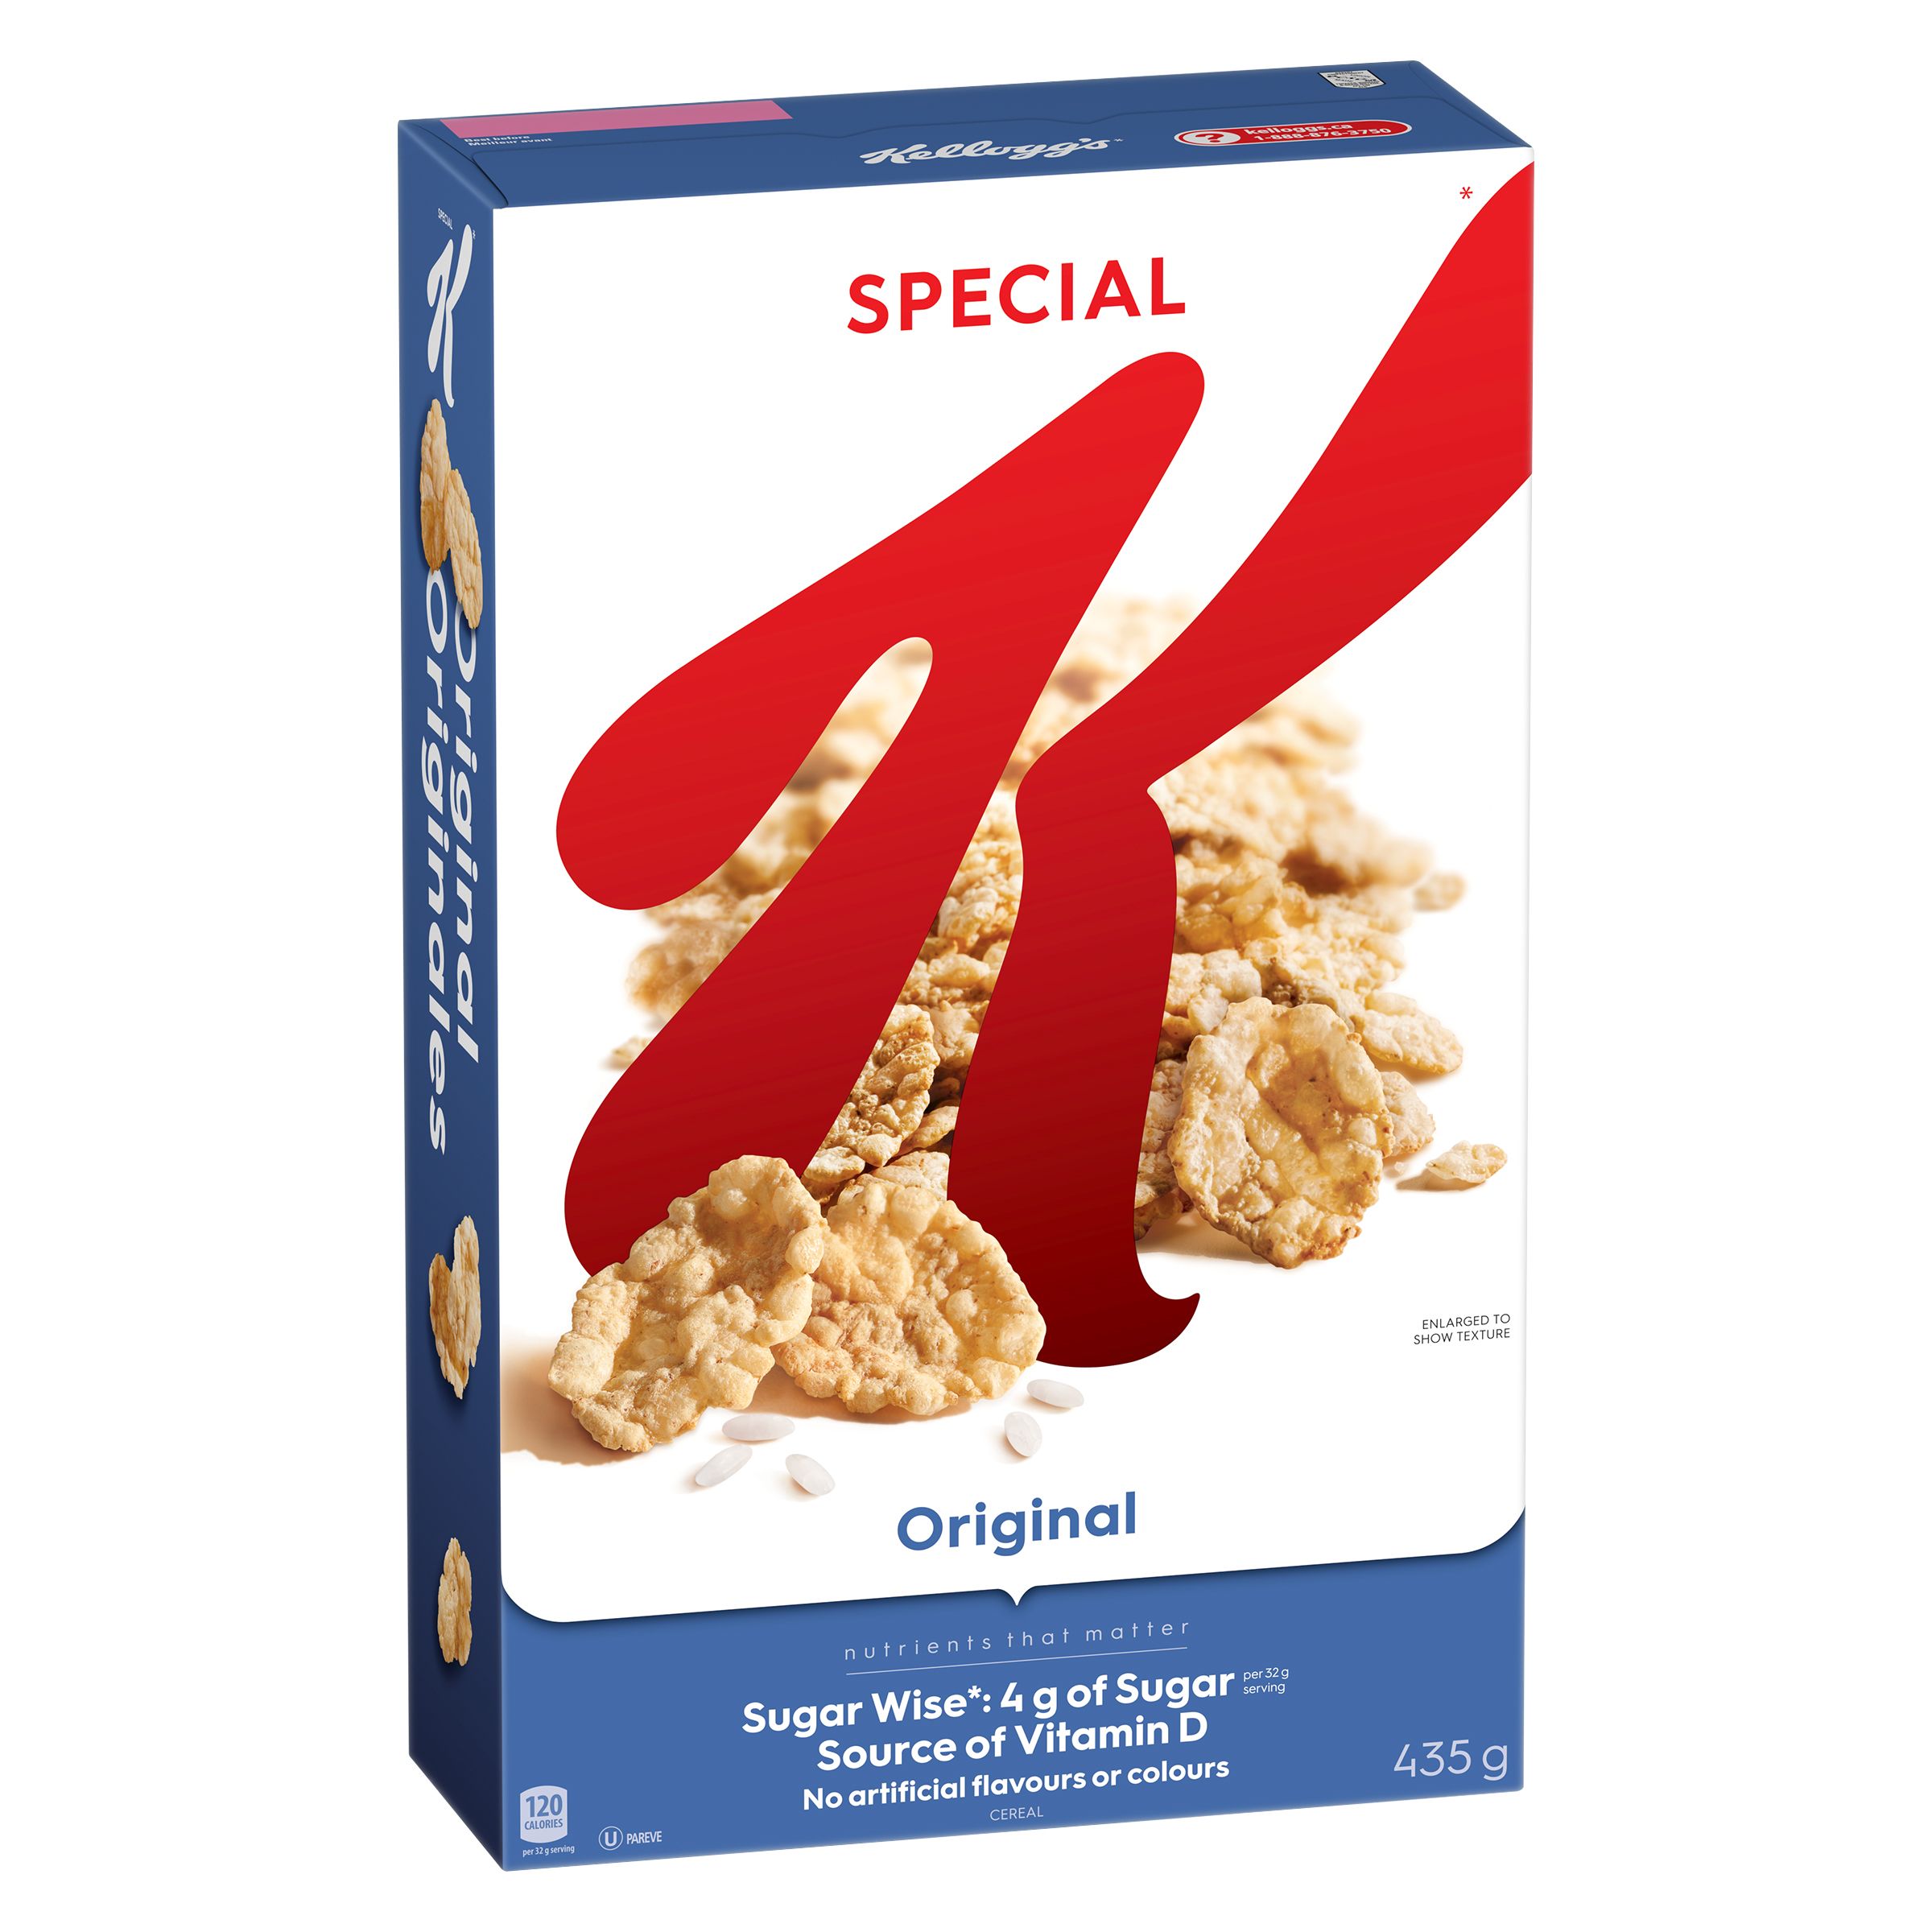 Special K Special K Original Cereal